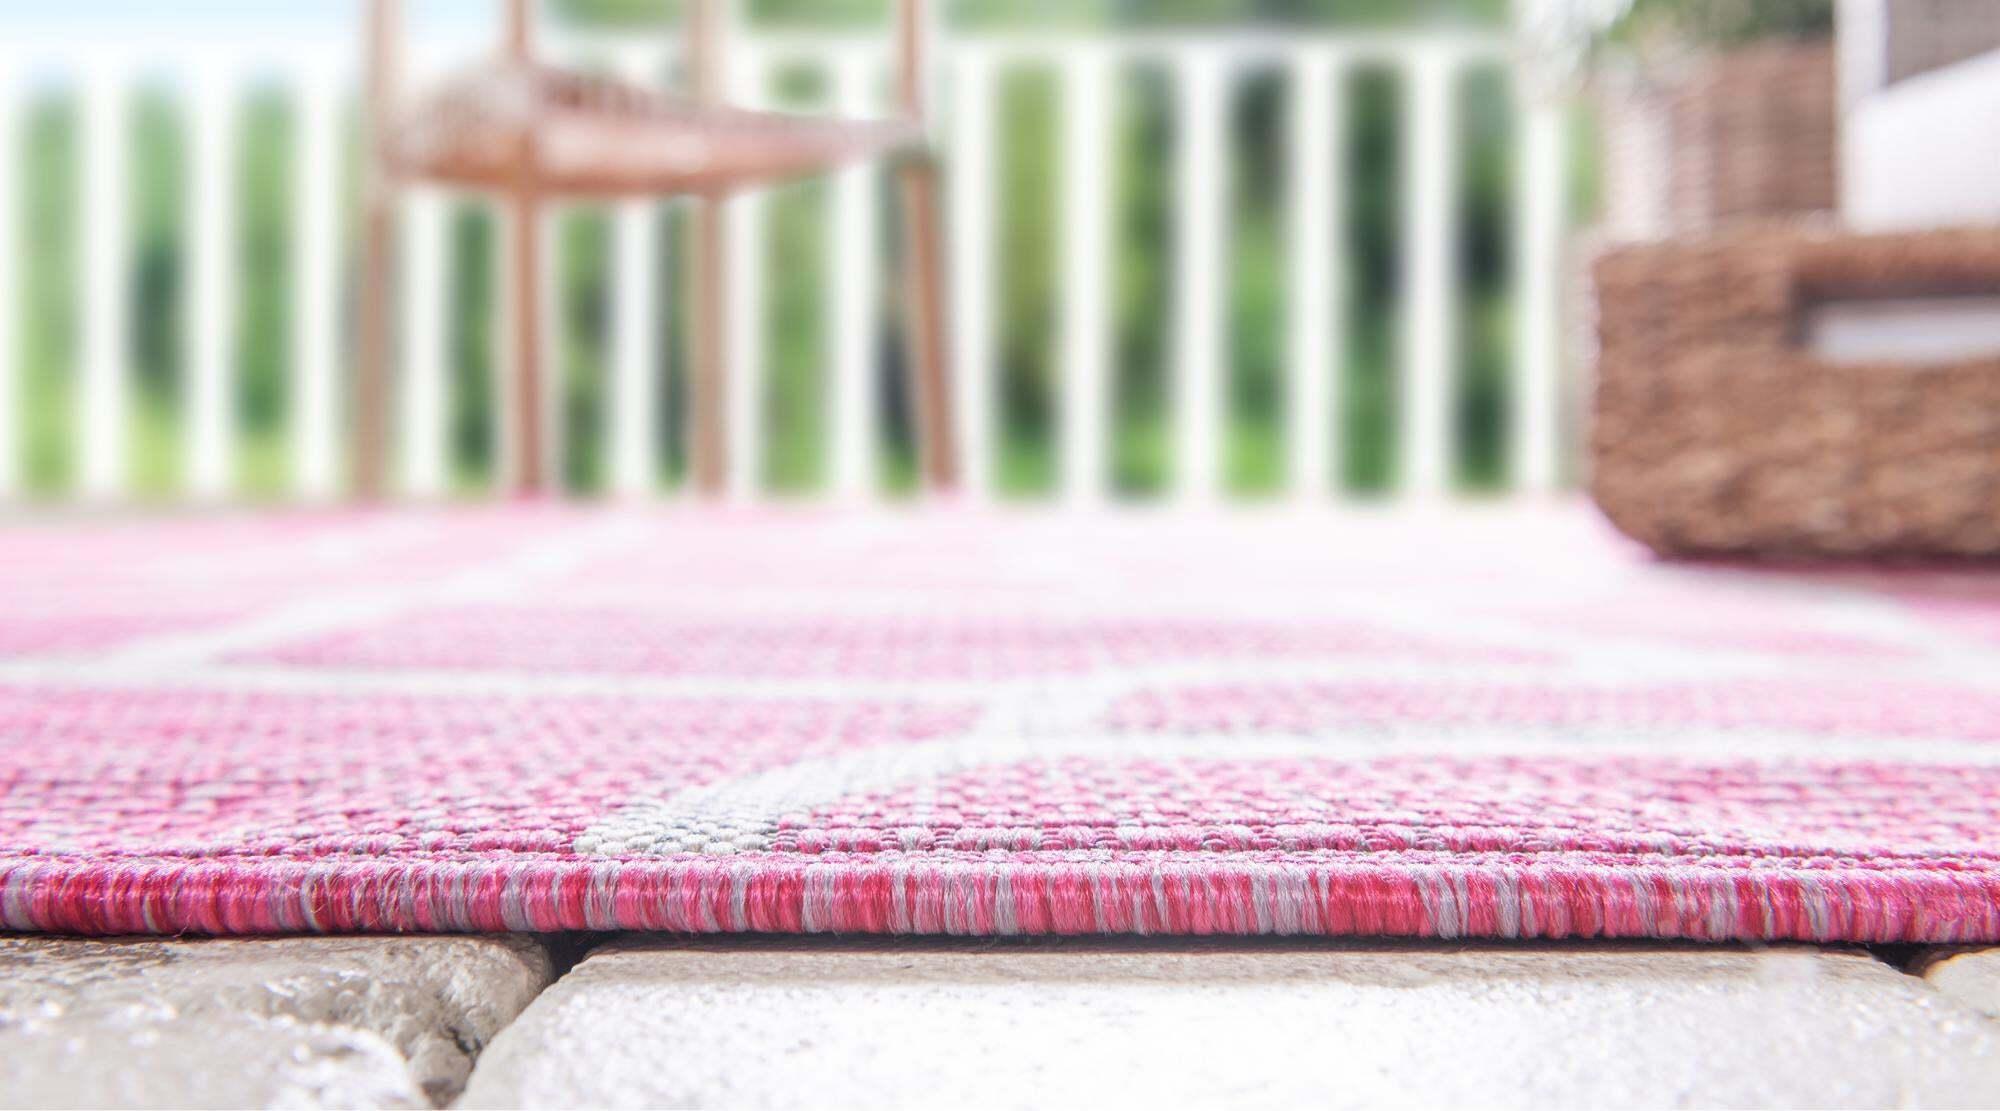 Unique Loom Outdoor Rugs - Outdoor Safari Animal Print Rectangular 8x11 Rug Pink & Gray